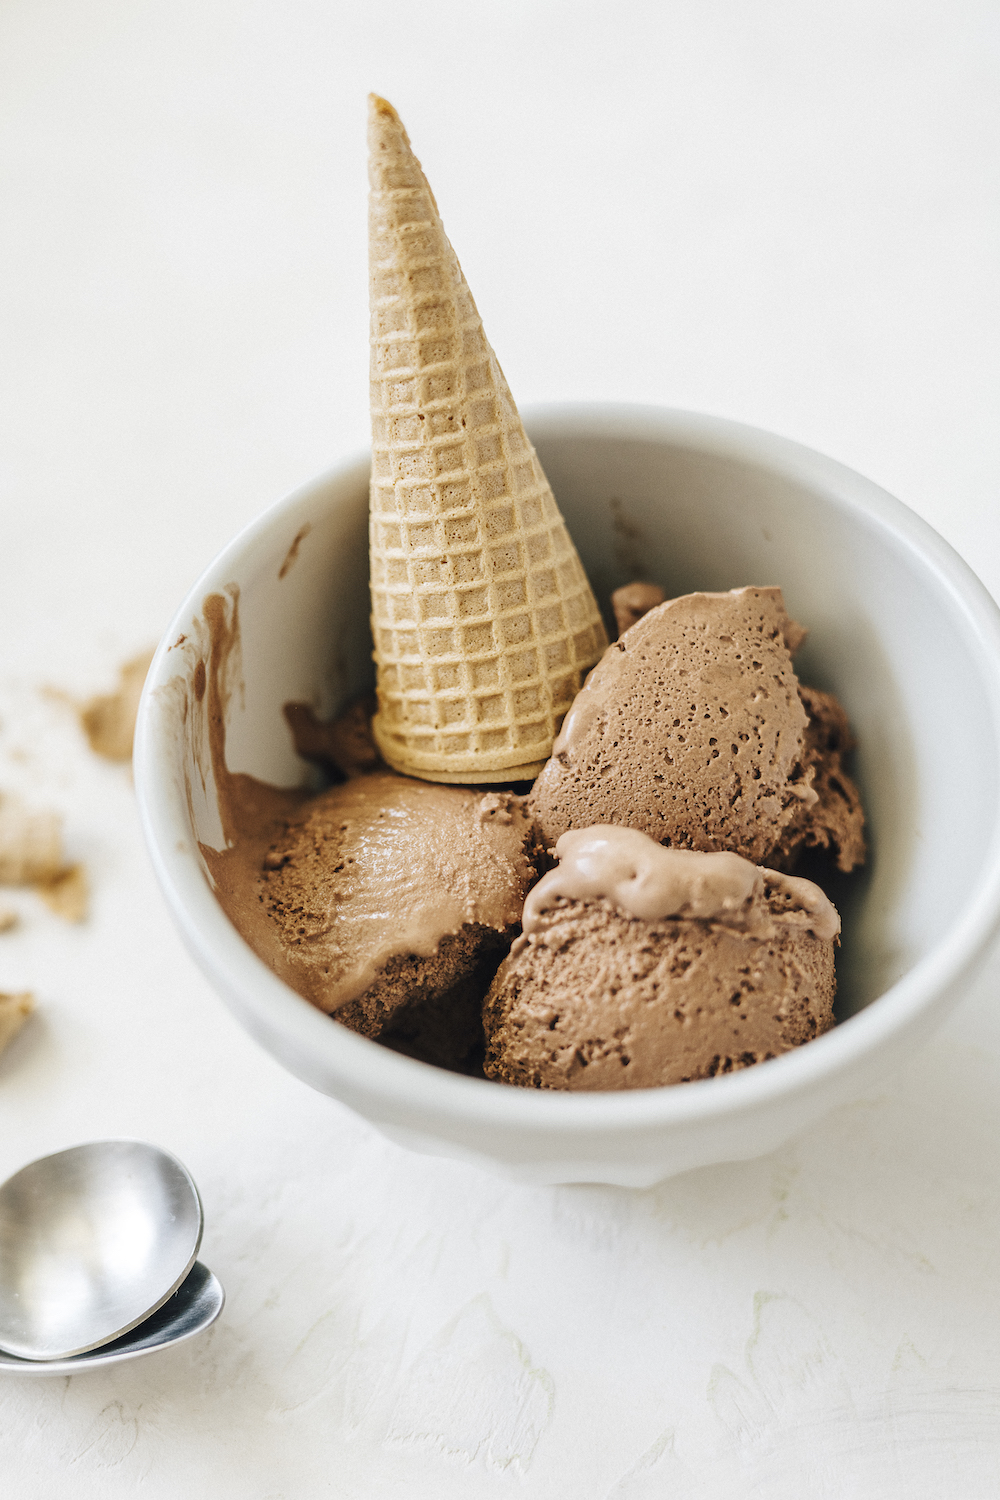 camille-styles-ice-cream-dairy-free-gluten-free-5485